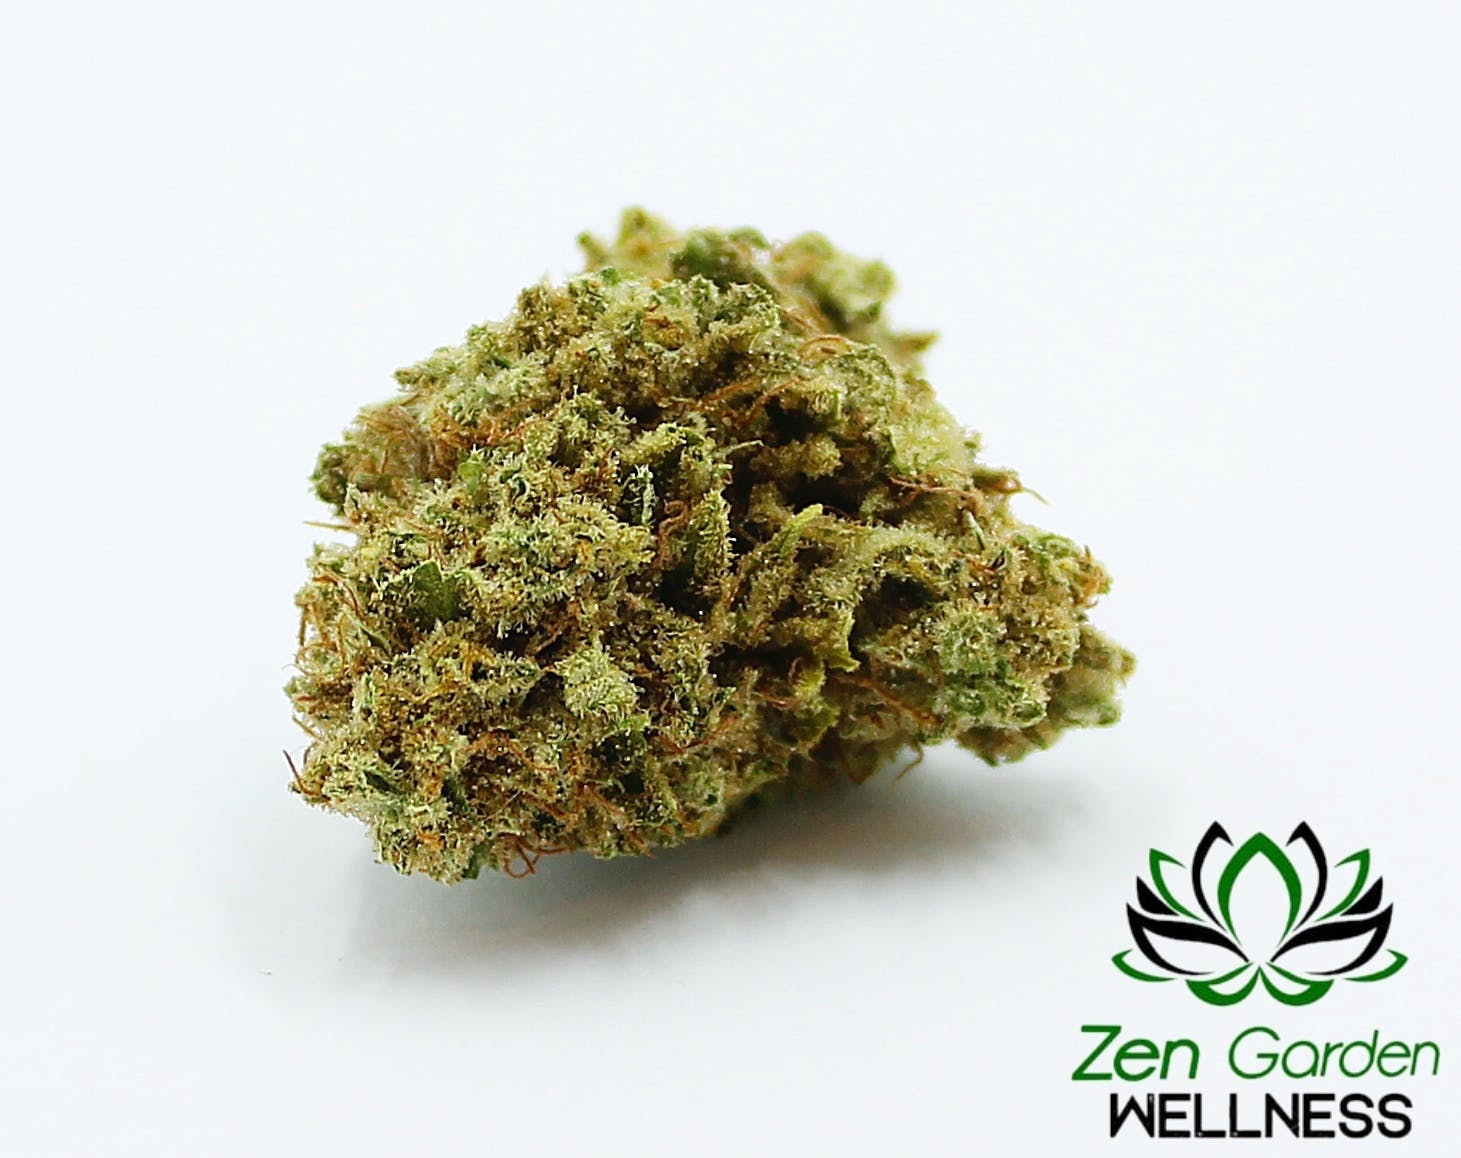 marijuana-dispensaries-zen-garden-wellness-in-stockton-str8-organics-strawberry-banana